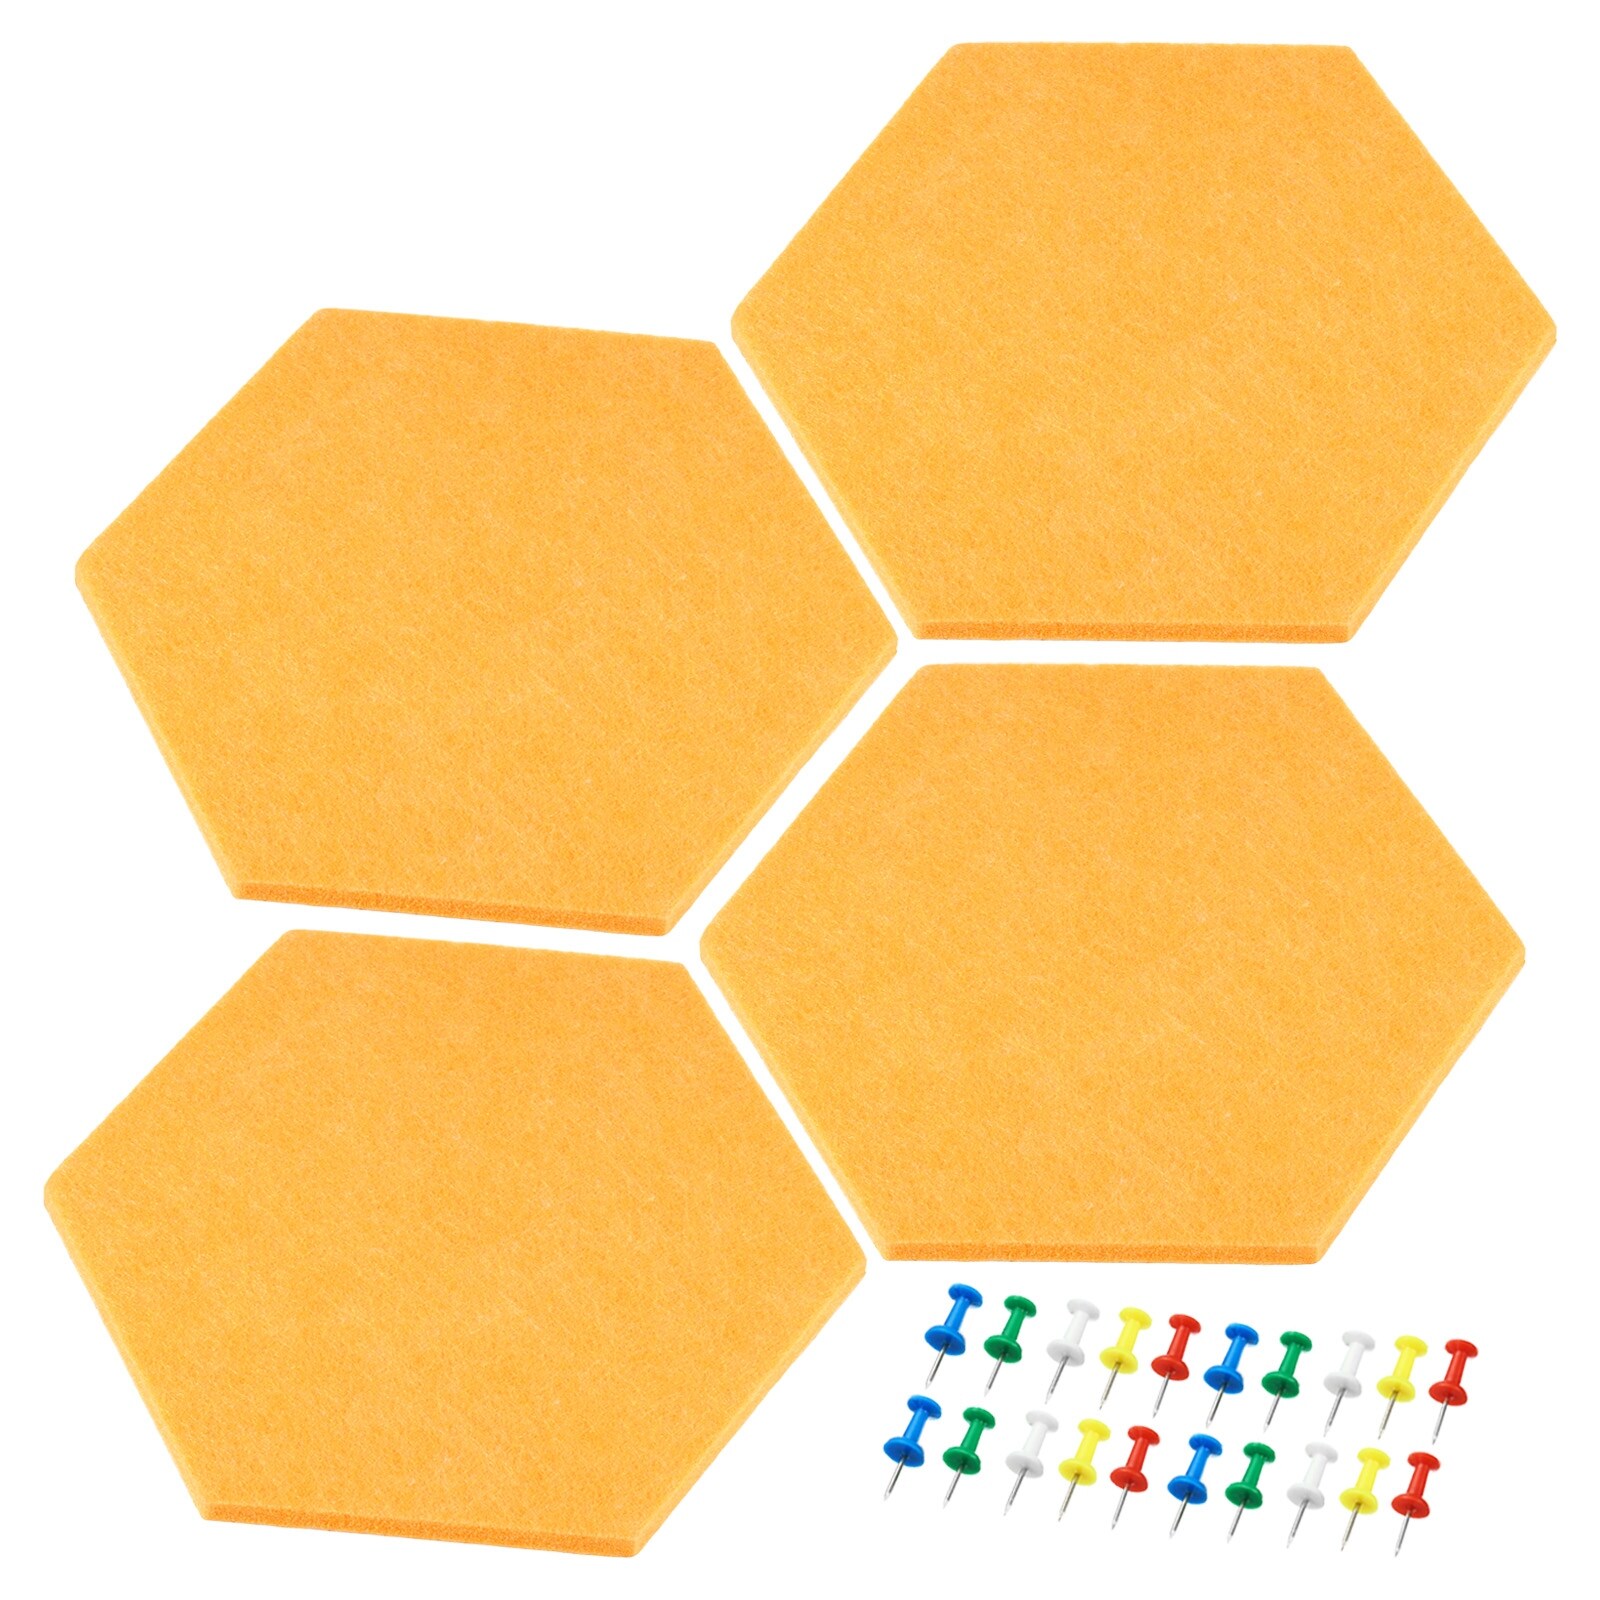 Cork Bulletin Board Hexagon, Small Framed Corkboard Tiles for Small, 1 Pack